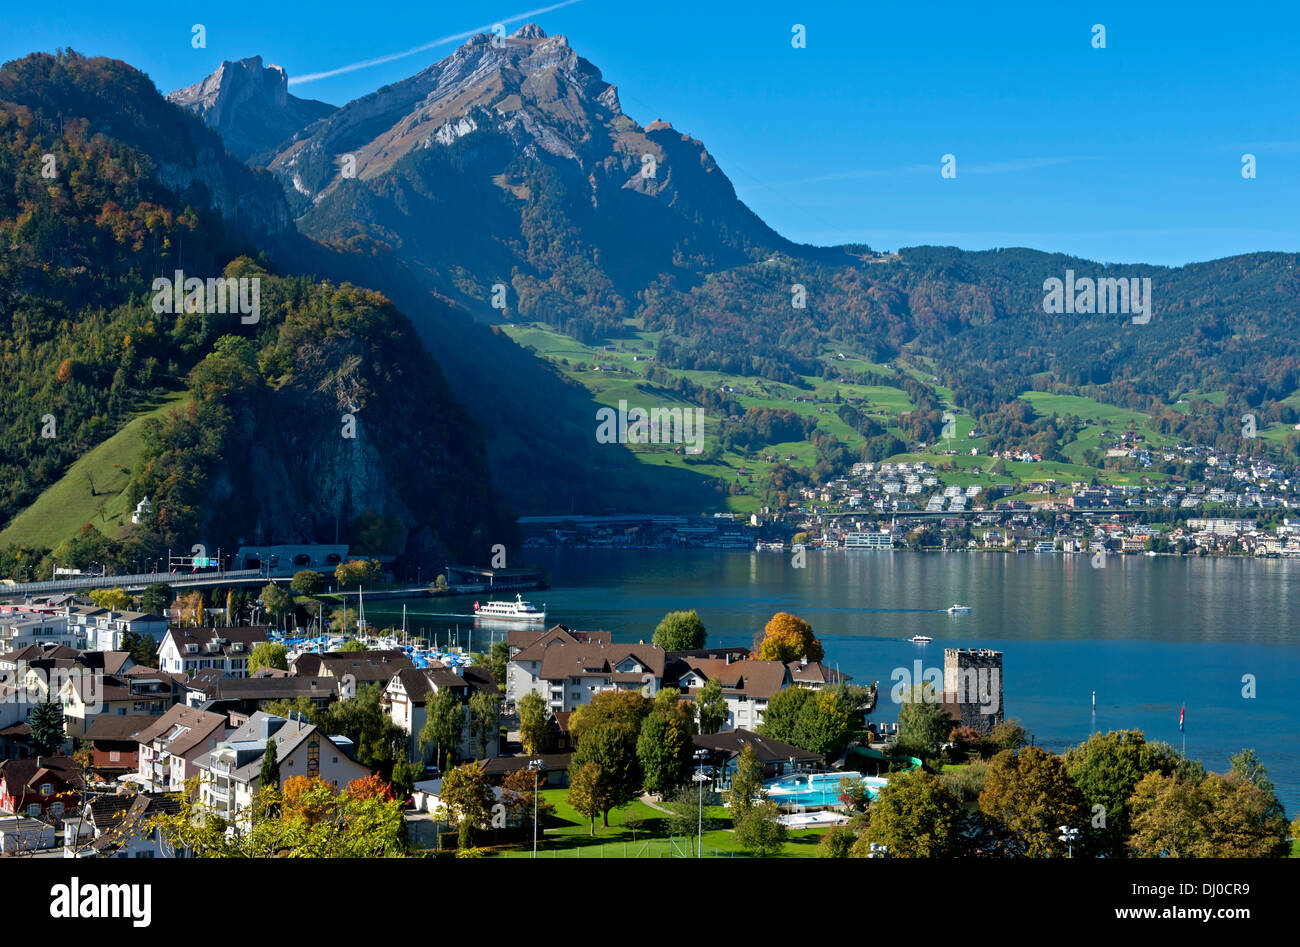 The municipality of Stansstad at Lake Lucerne (Vierwaldstättersee) with Mount Pilatus, canton of Nidwalden. Switzerland Stock Photo